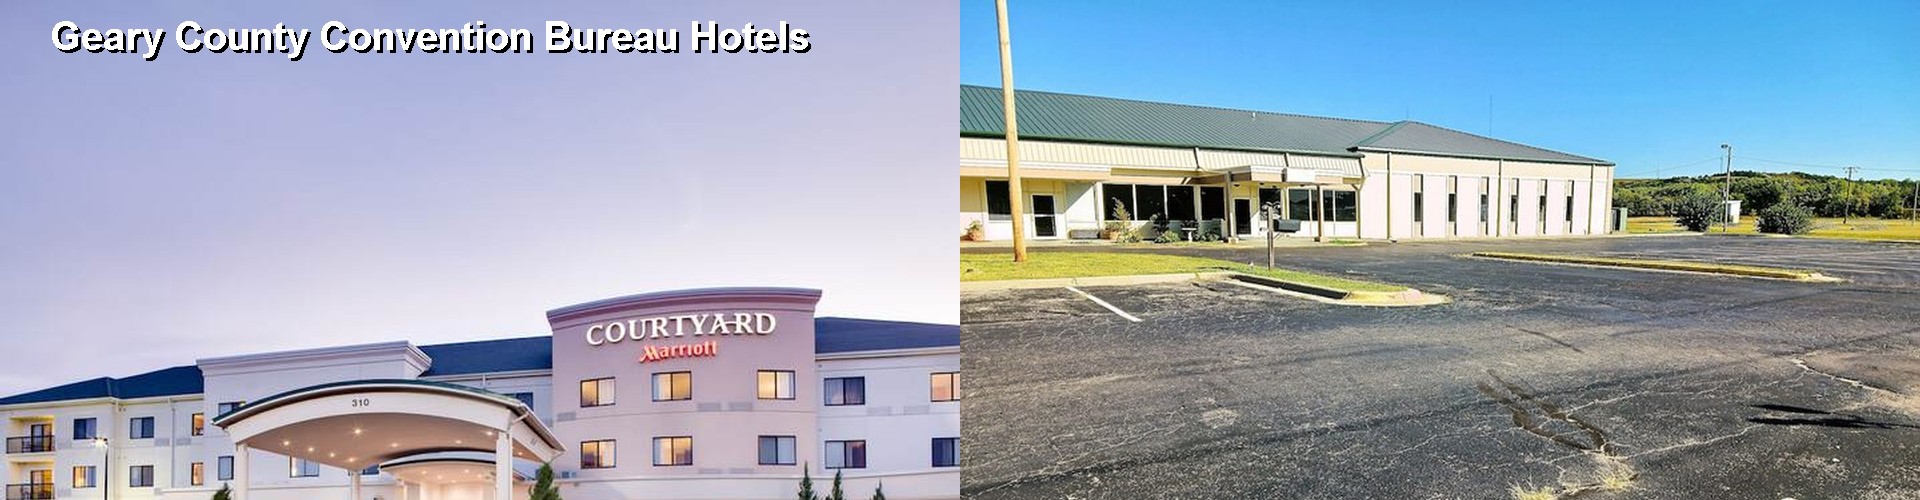 5 Best Hotels near Geary County Convention Bureau